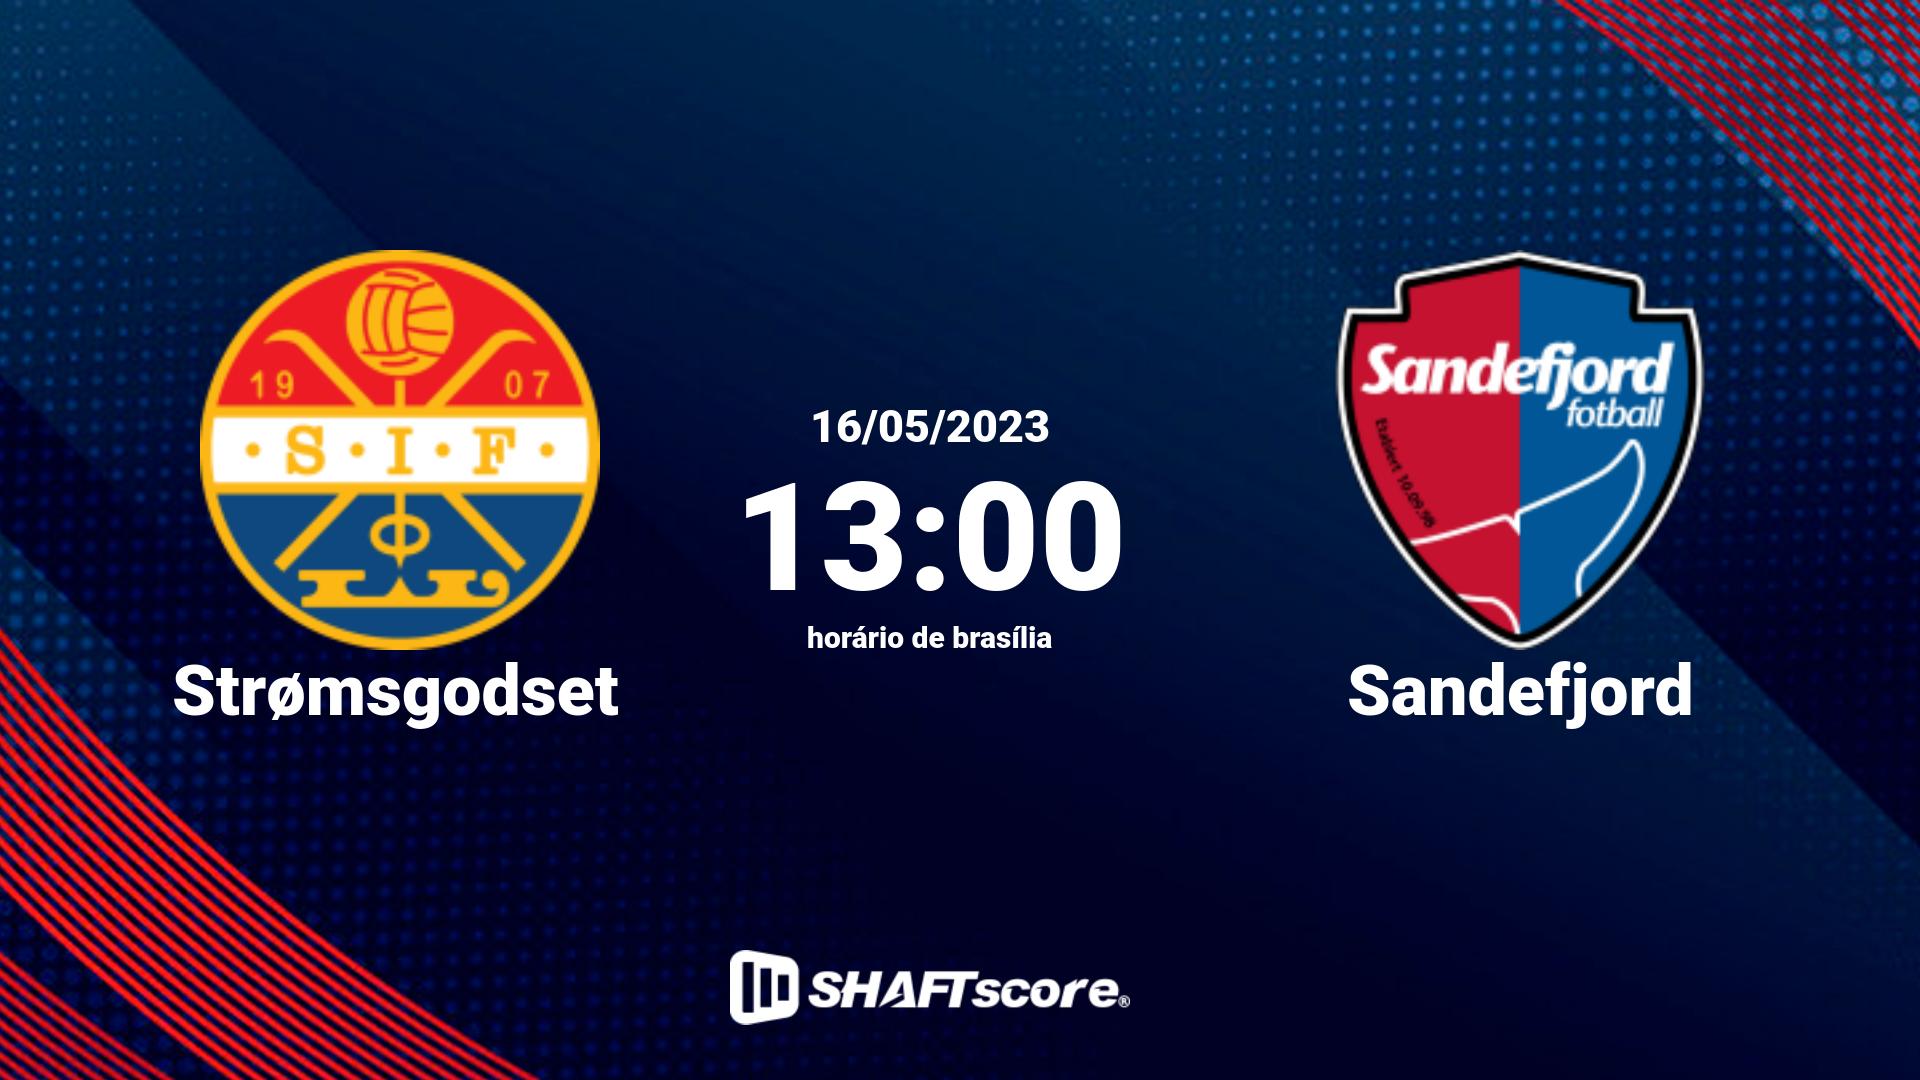 Estatísticas do jogo Strømsgodset vs Sandefjord 16.05 13:00